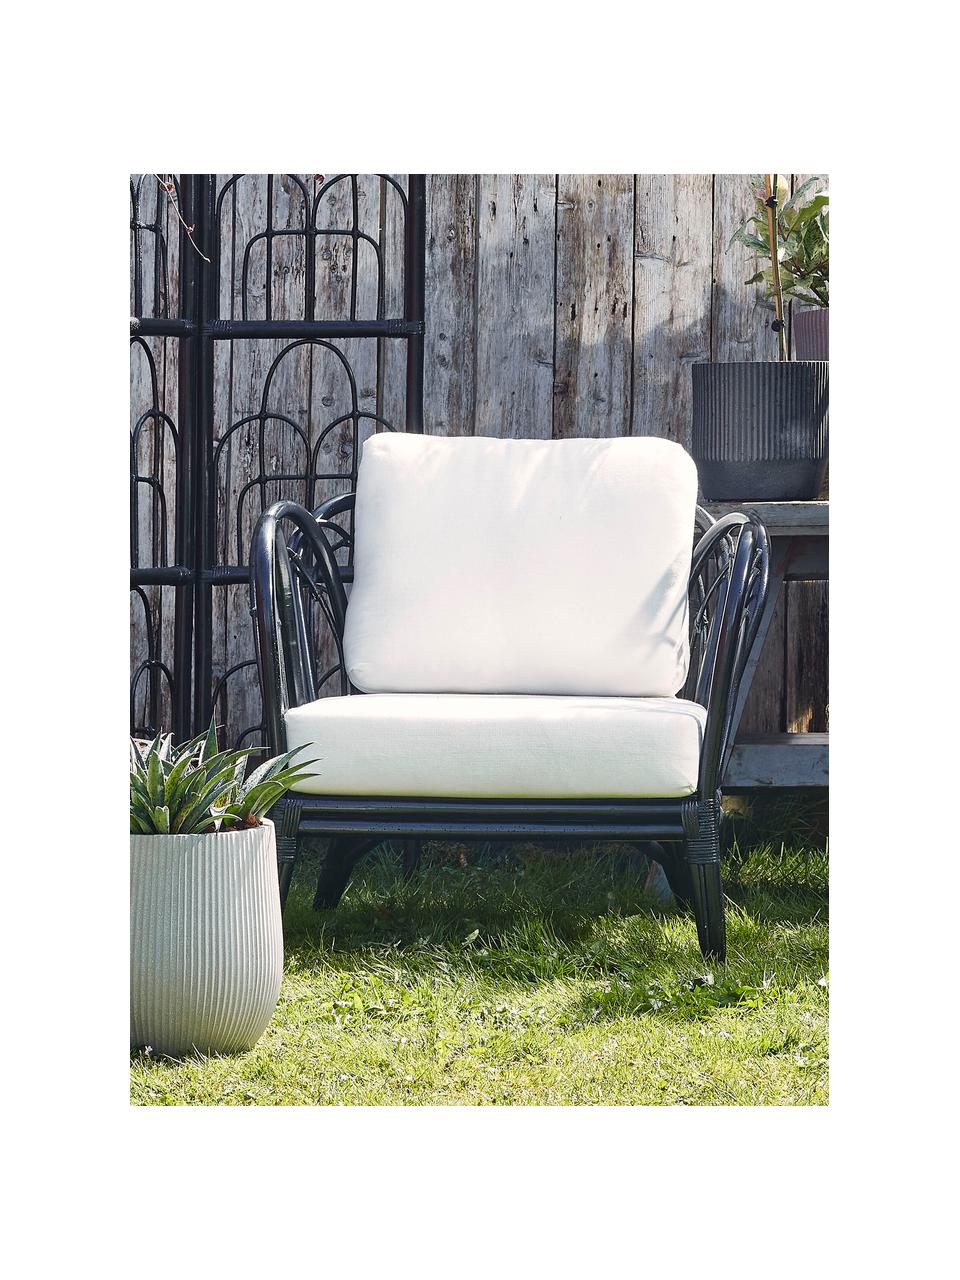 Ratanová stolička s vankúšom Sherbrooke, Čierna, biela, Š 83 x H 72 cm